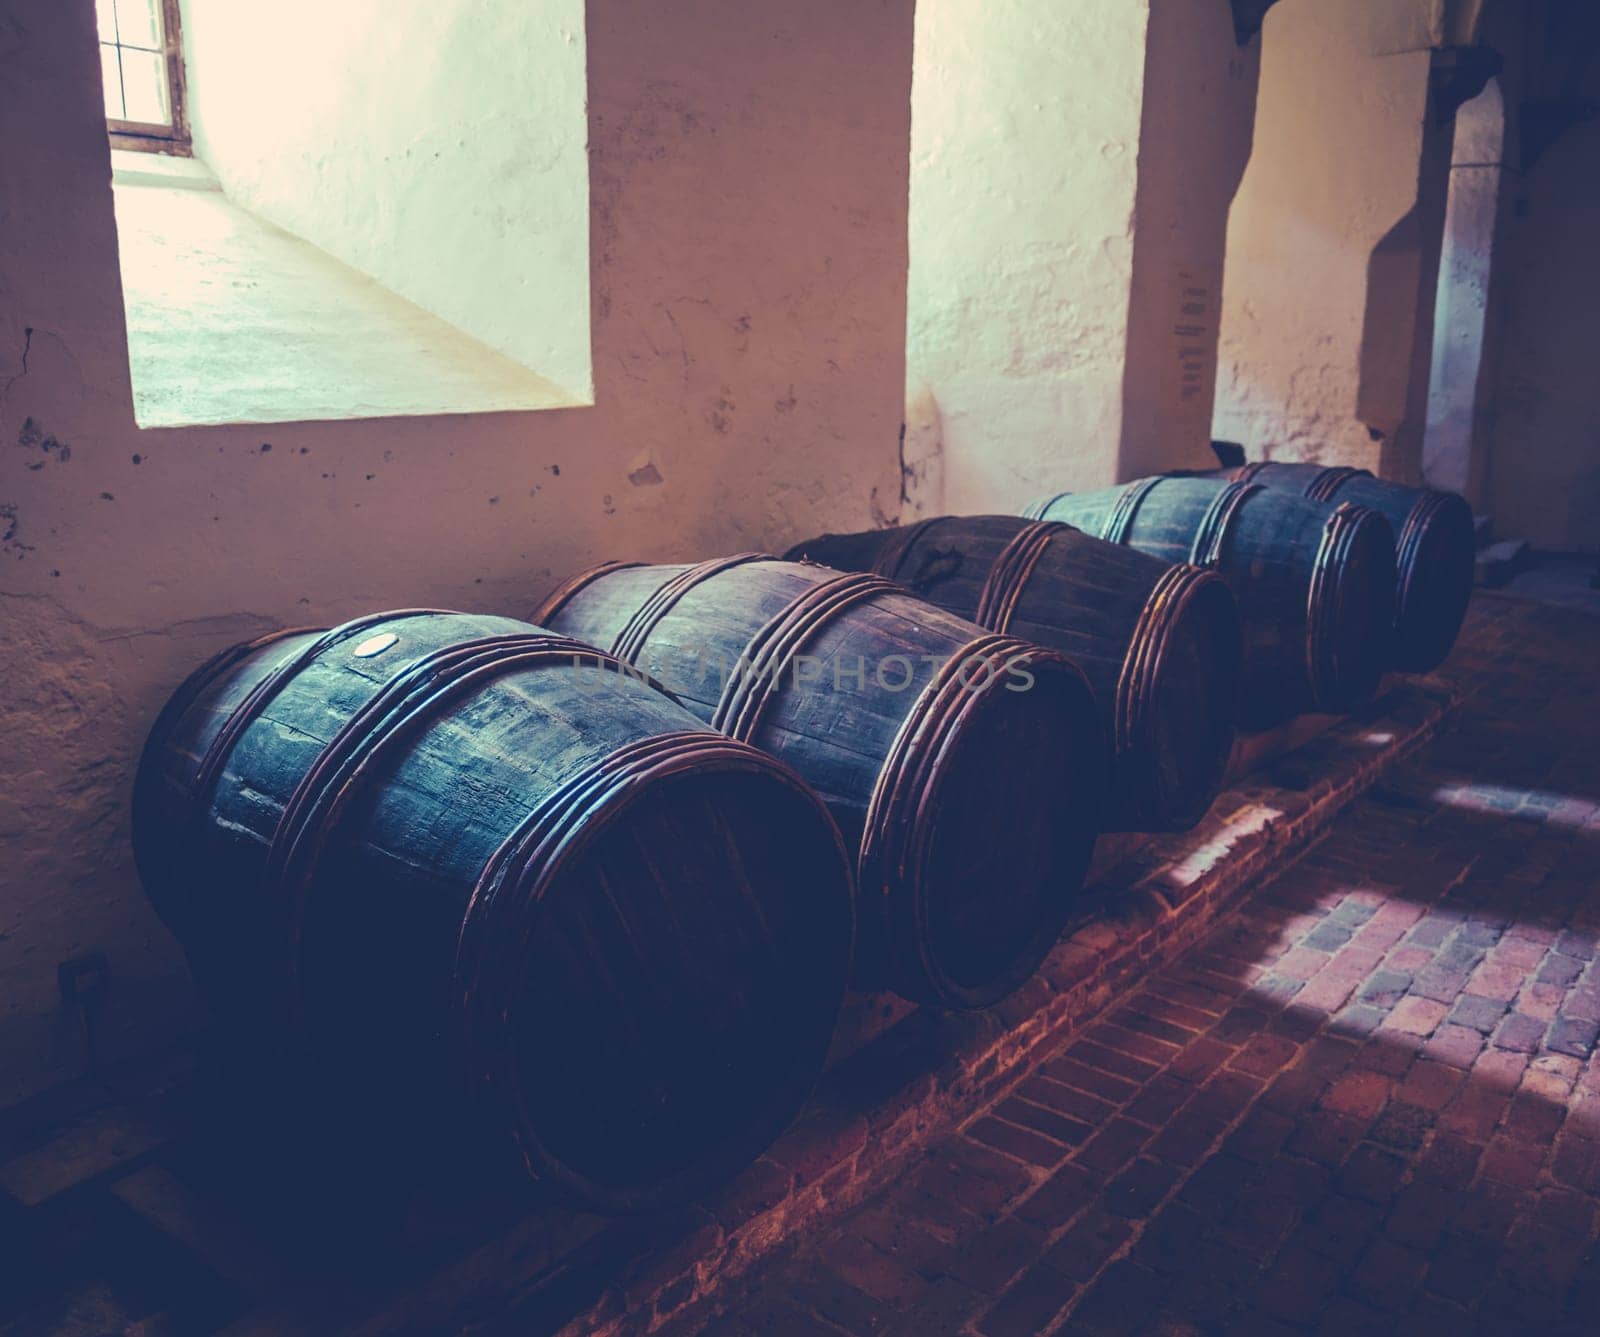 Barrels Of Wine In A Cellar by mrdoomits